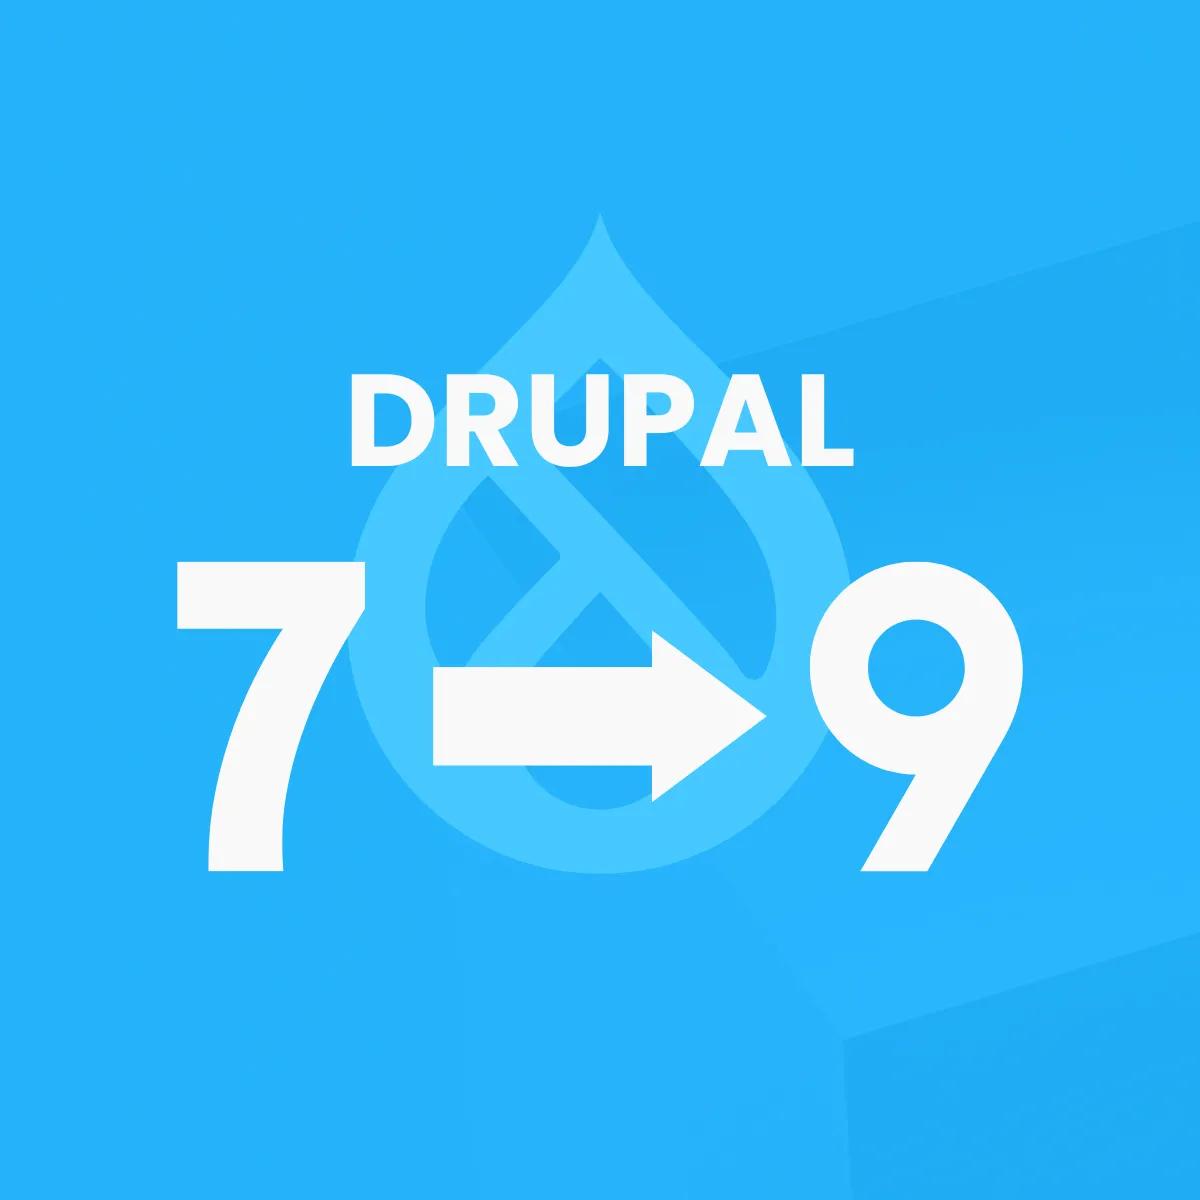 Drupal 7 to 9